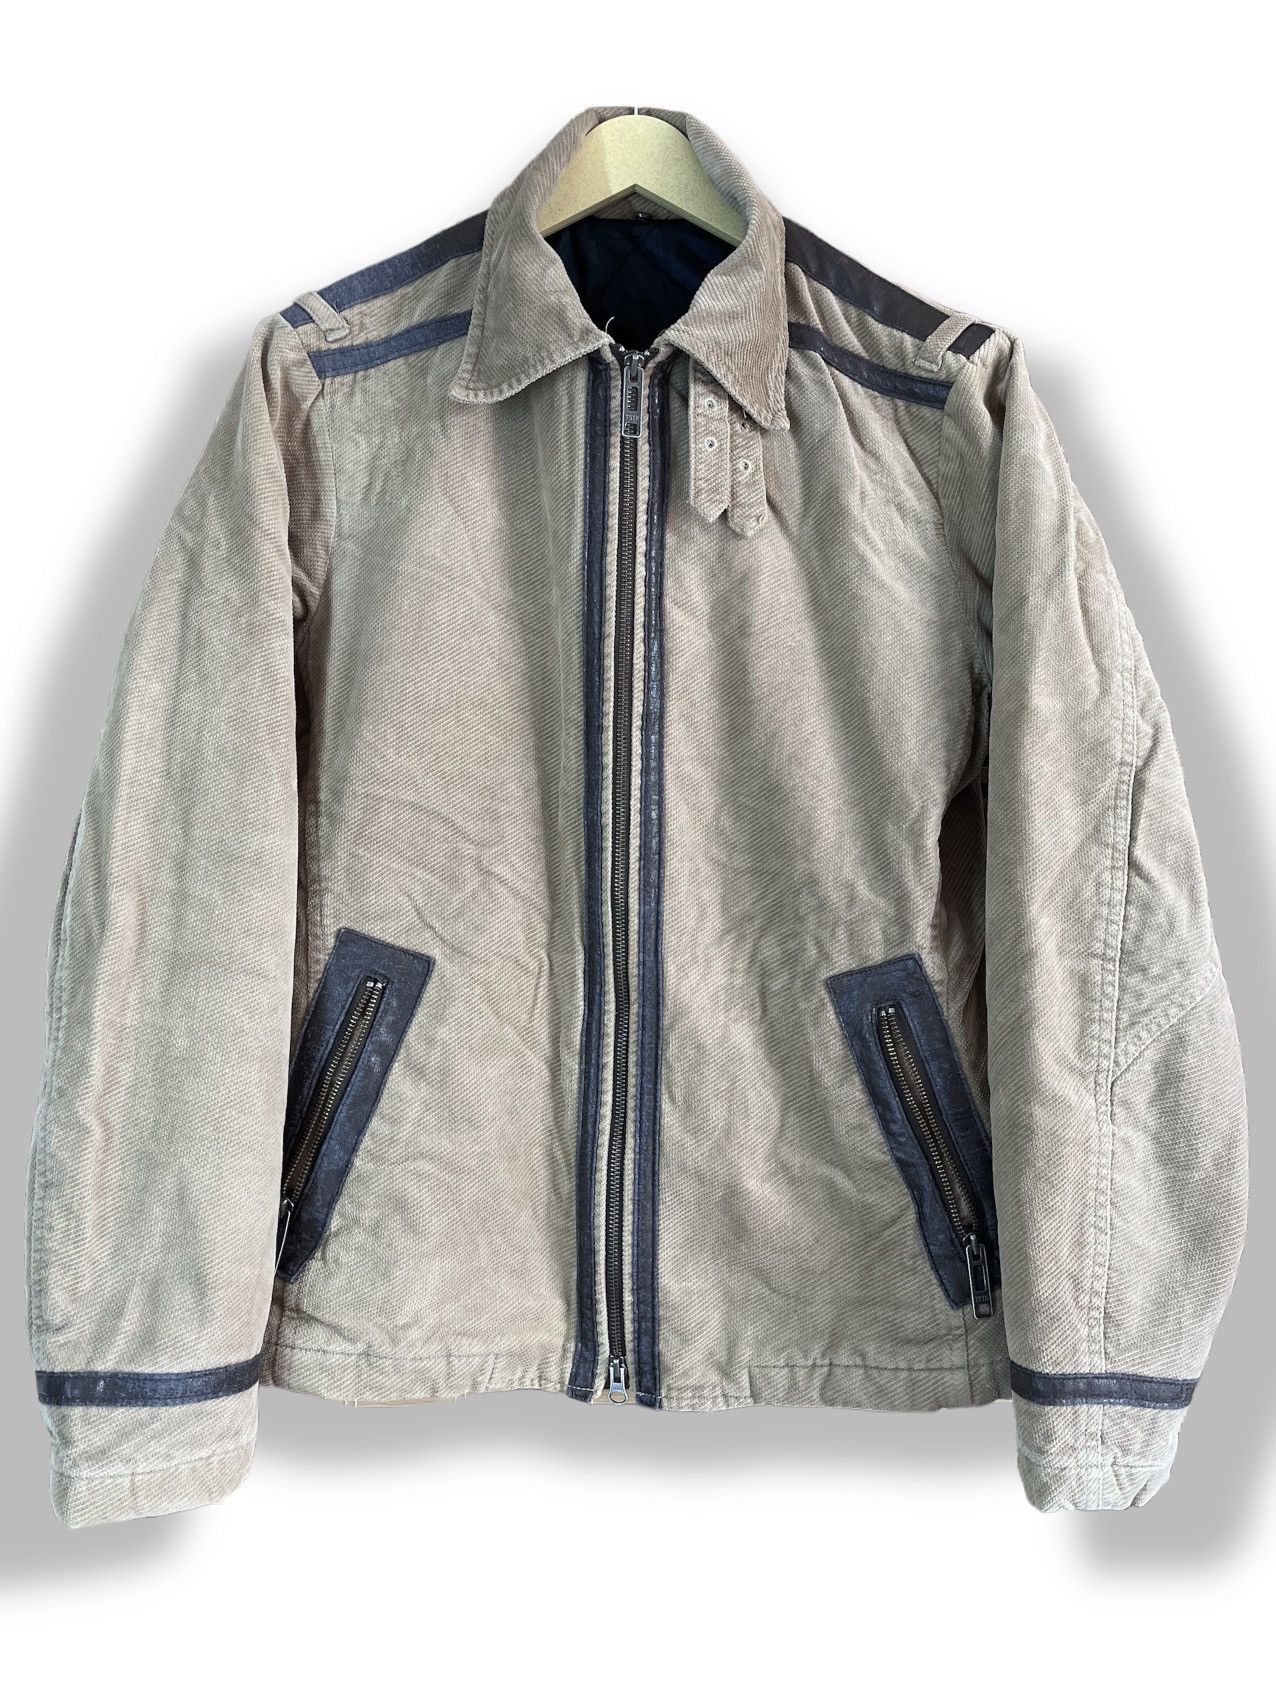 Vintage Takeo Kikuchi Kapital Jacket Japanese Designer - 1